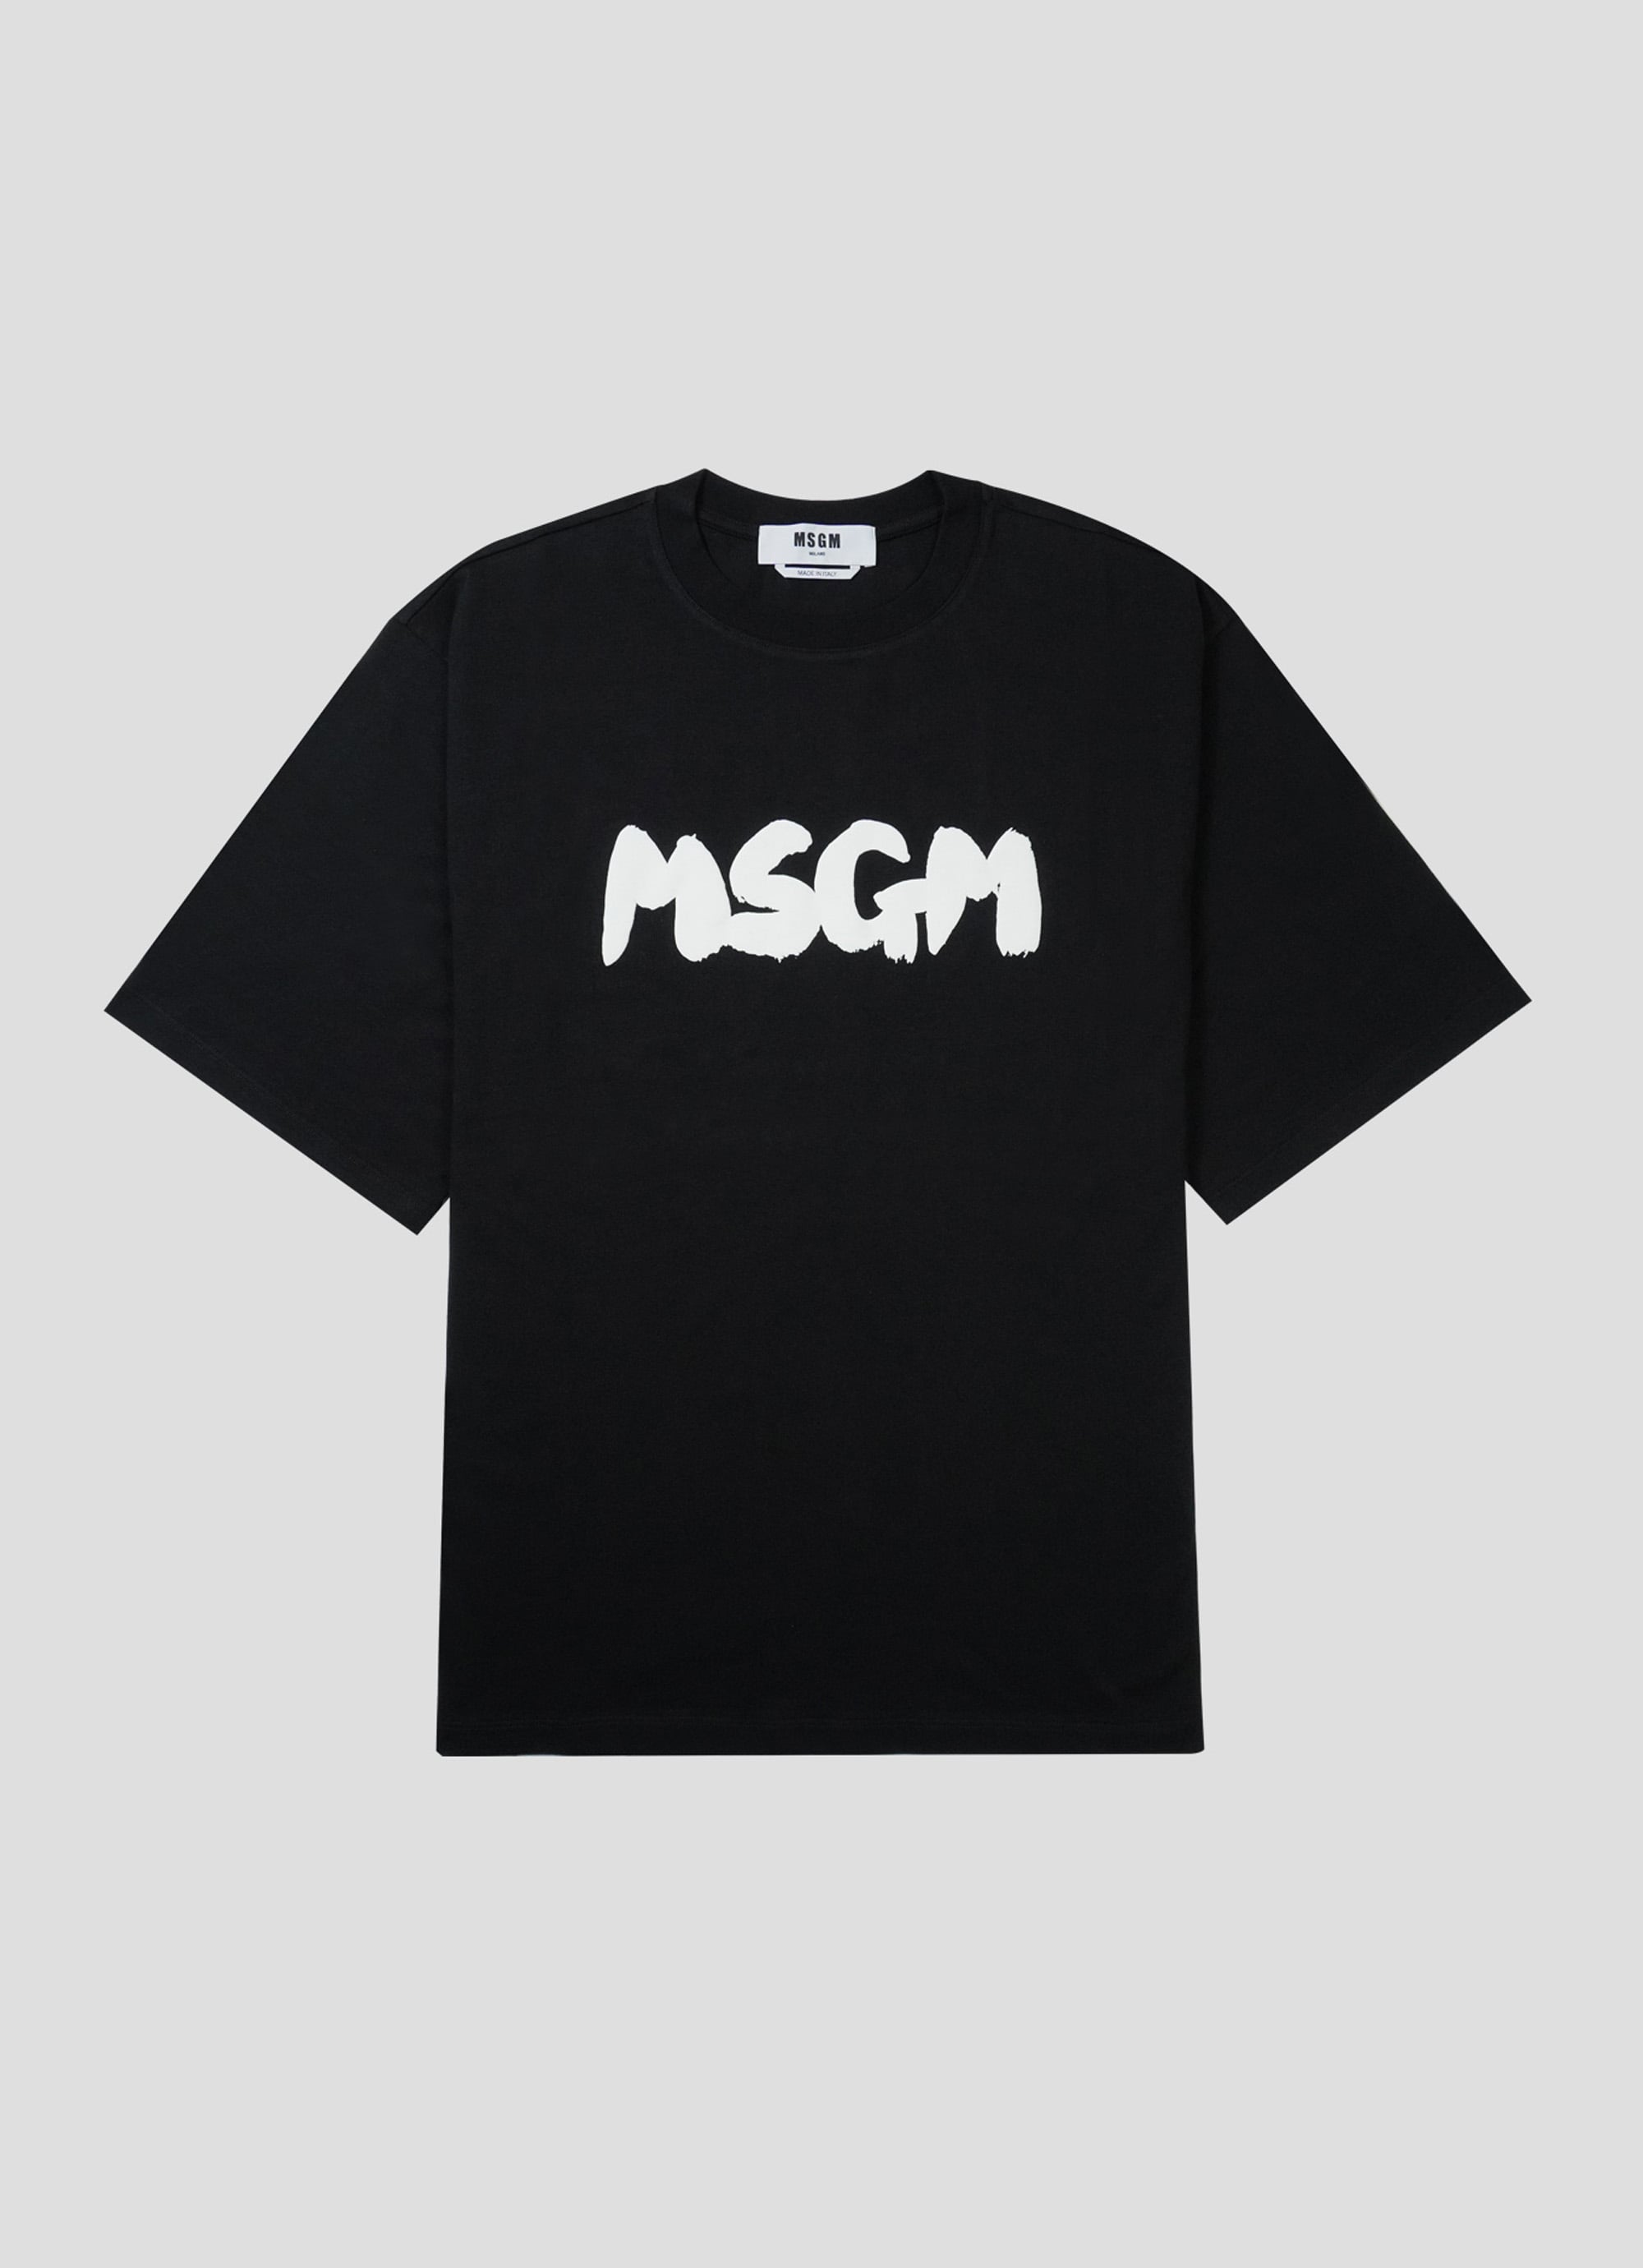 MSGM NEWブラッシュストロークロゴTシャツ 詳細画像 ブラック×ホワイト 1